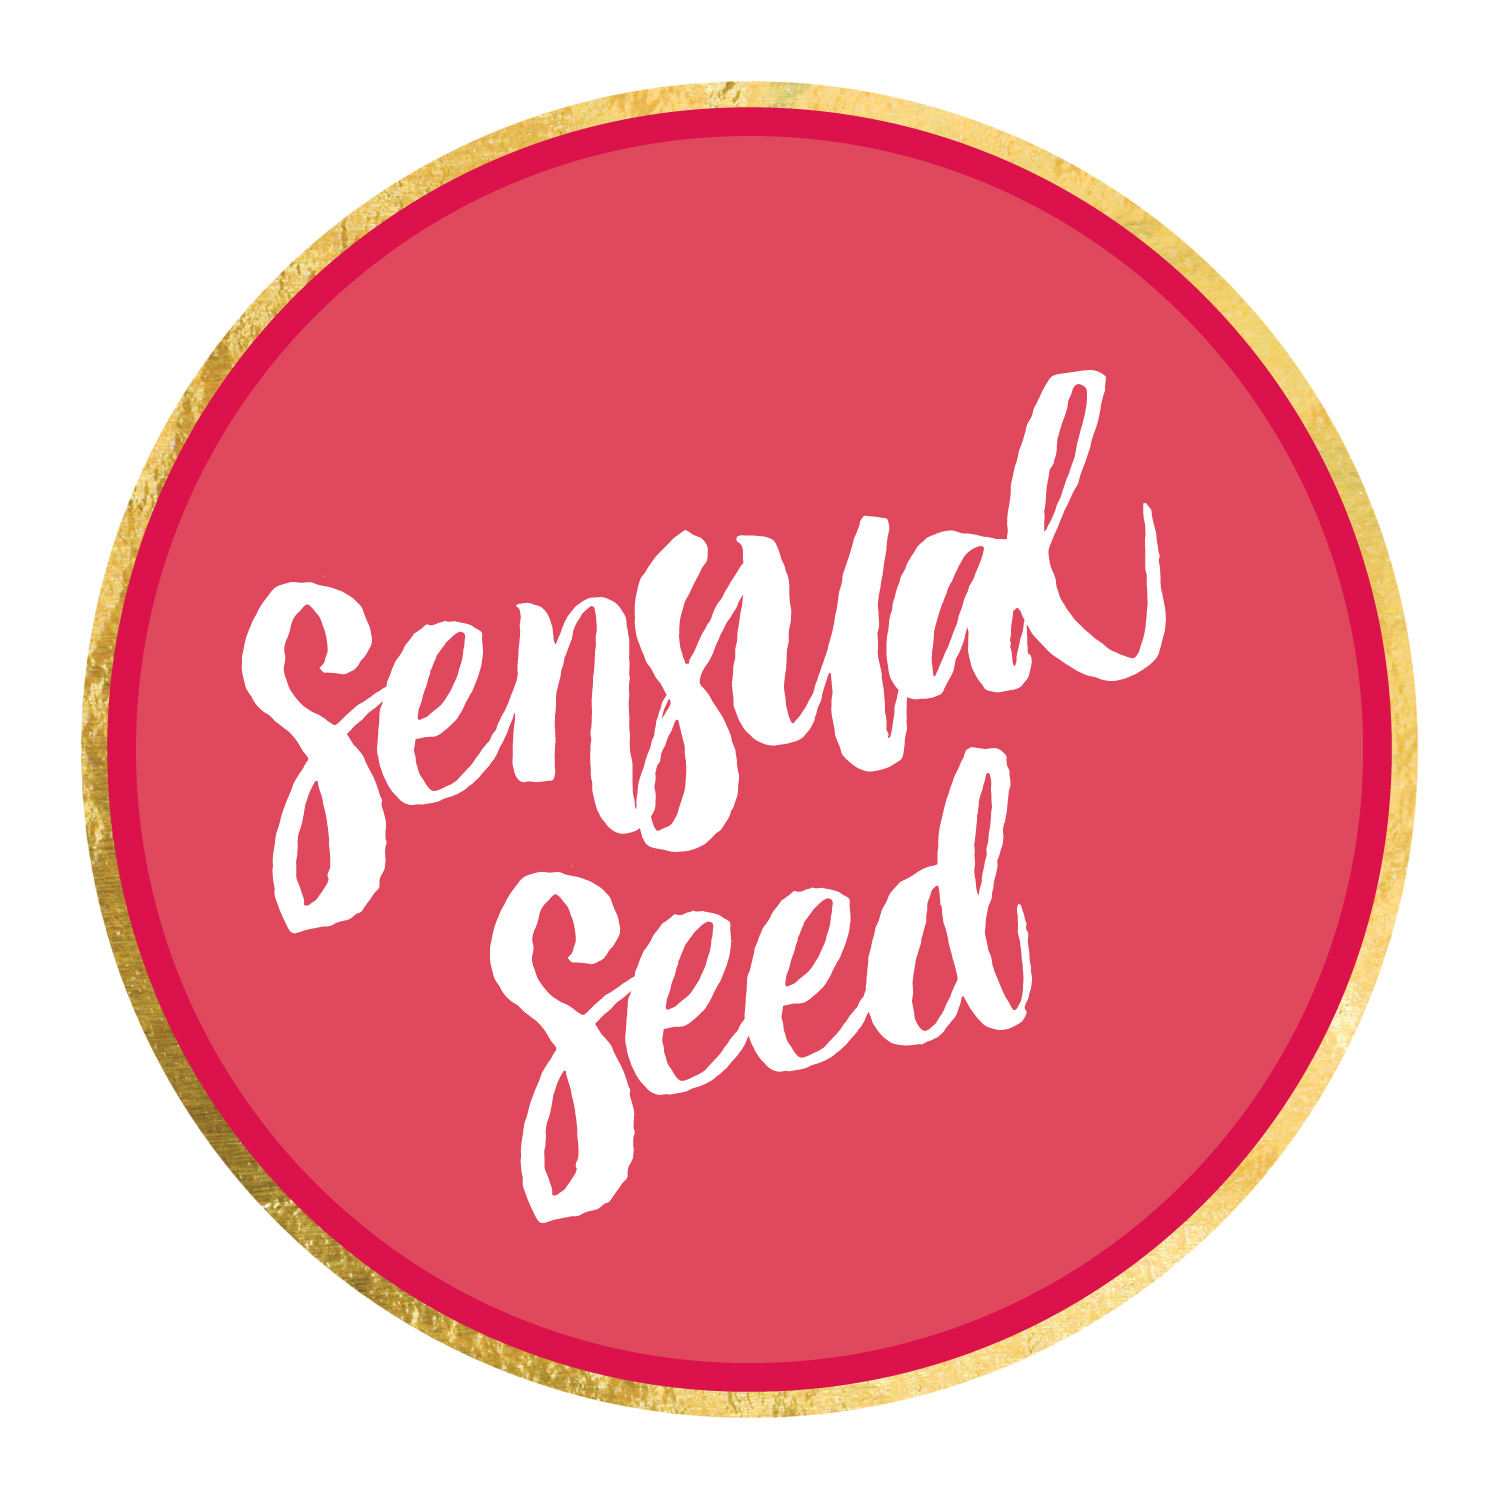 Sensual Seed | Oracle Cards